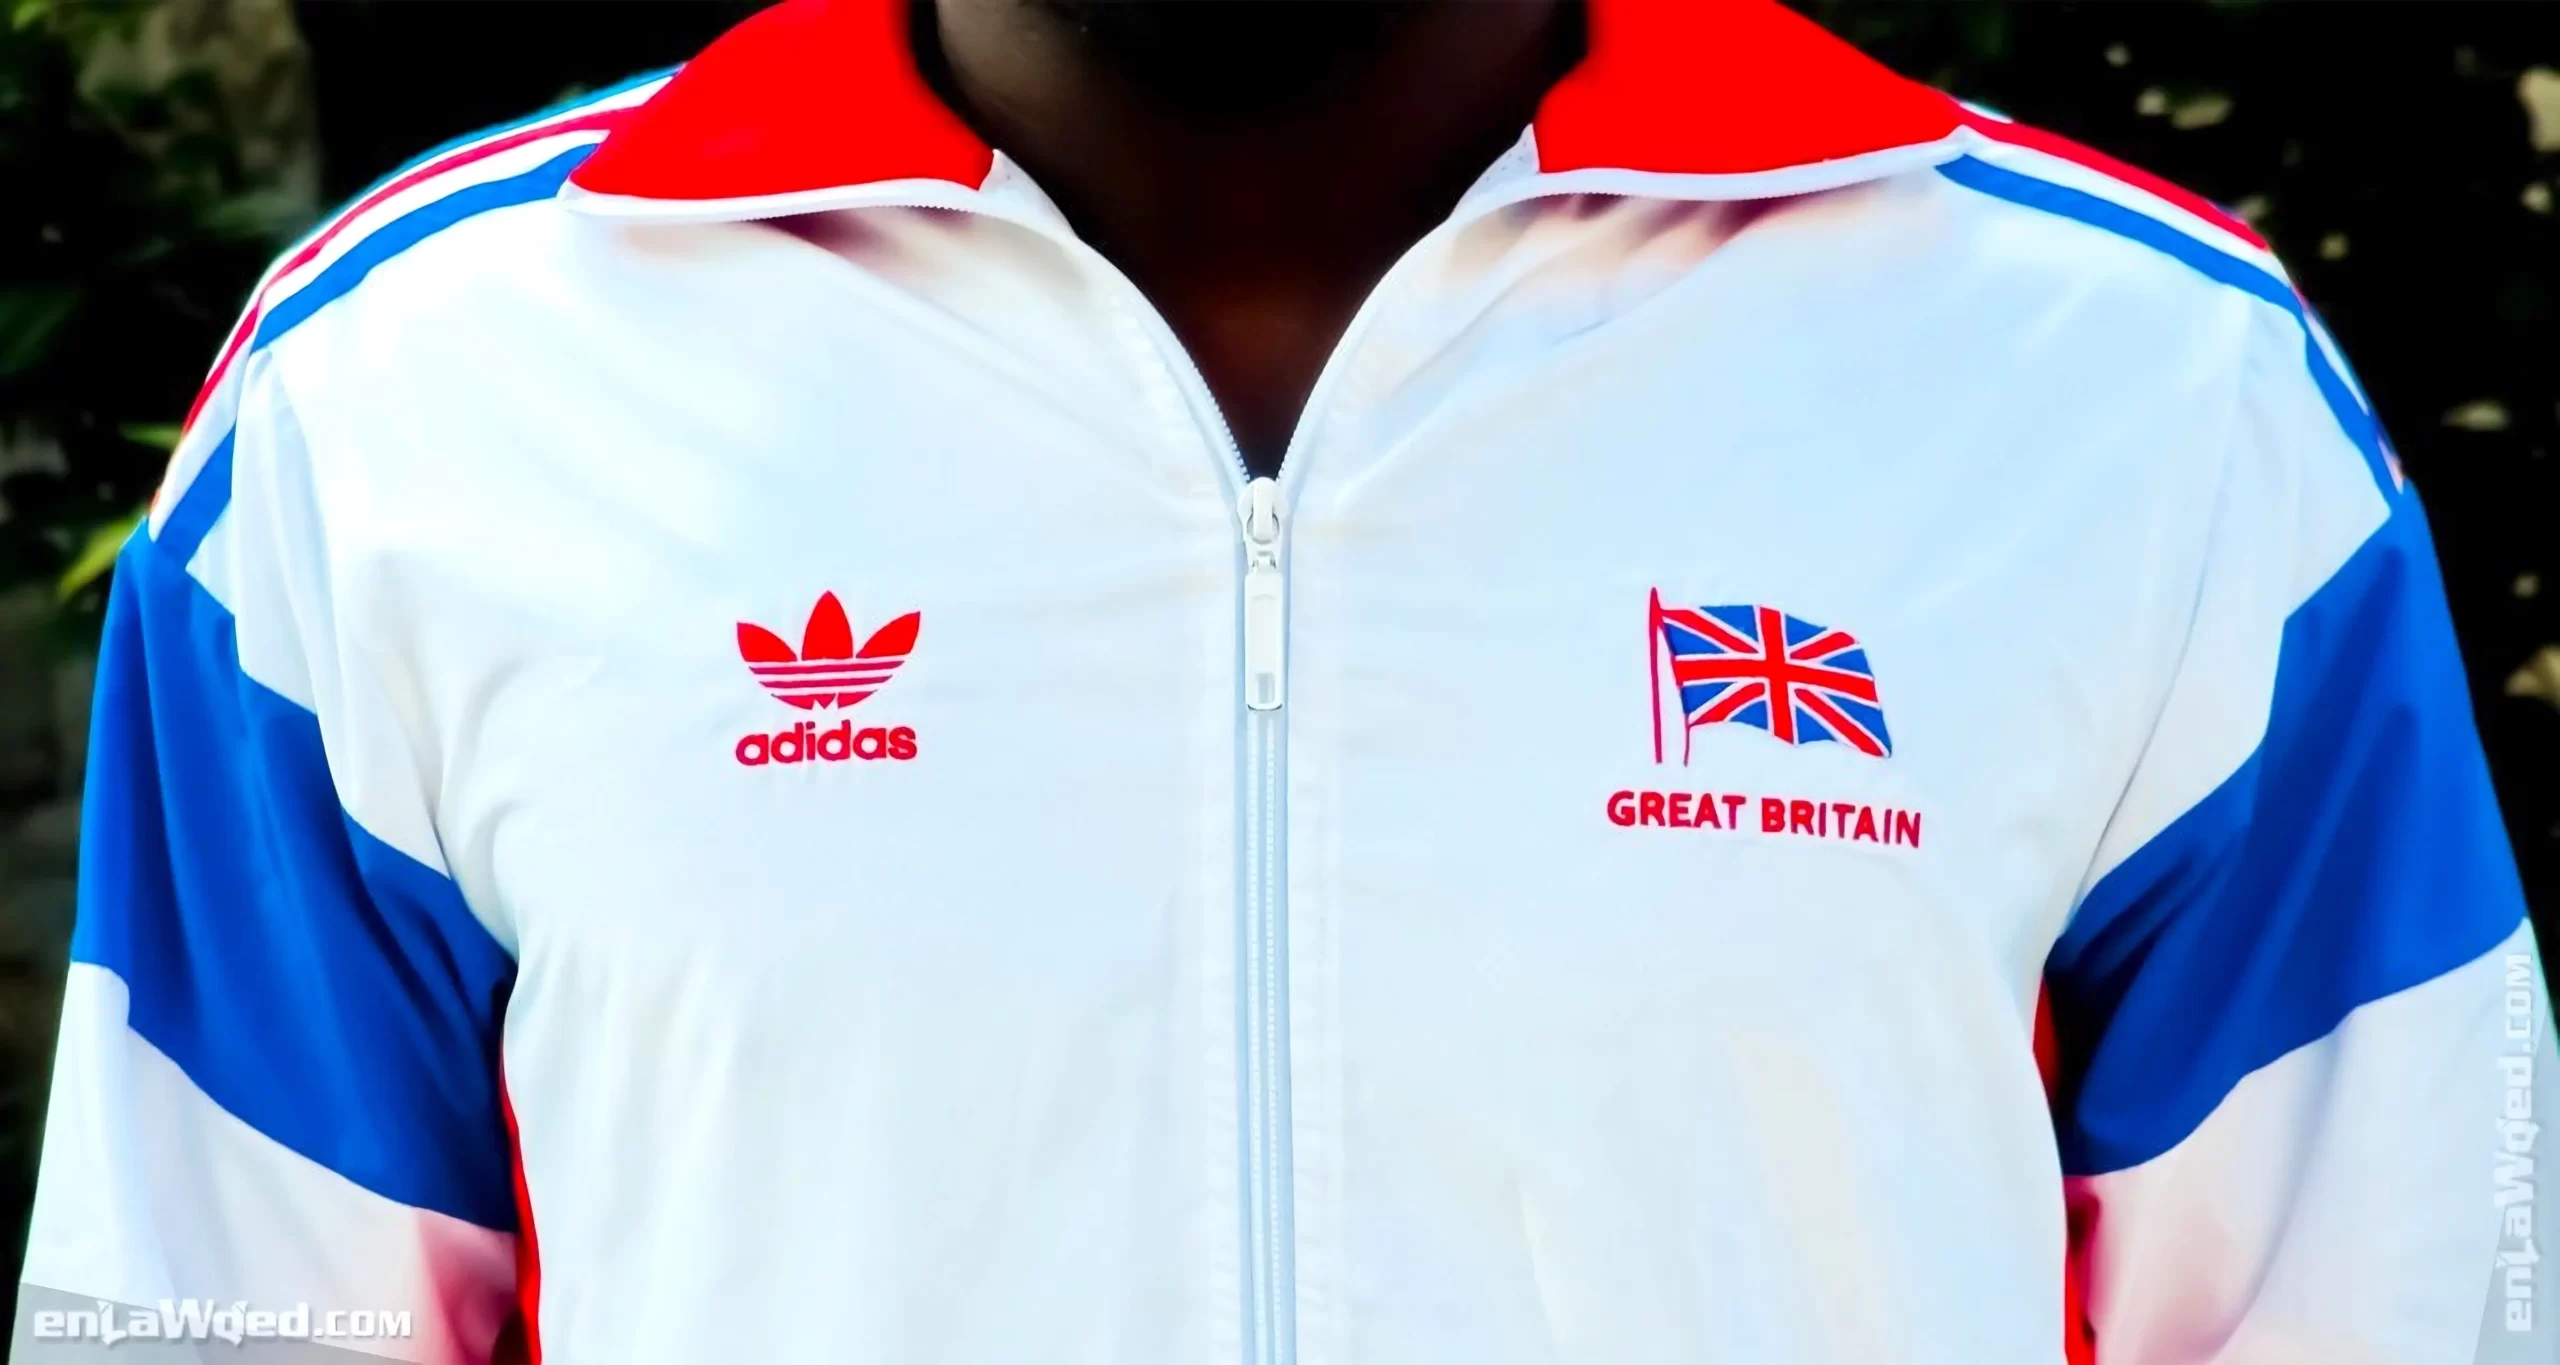 Men’s 2005 Great Britain Olympic ’84 TT by Adidas: Supported (EnLawded.com file #lmcen7g7uyyteemw56g)